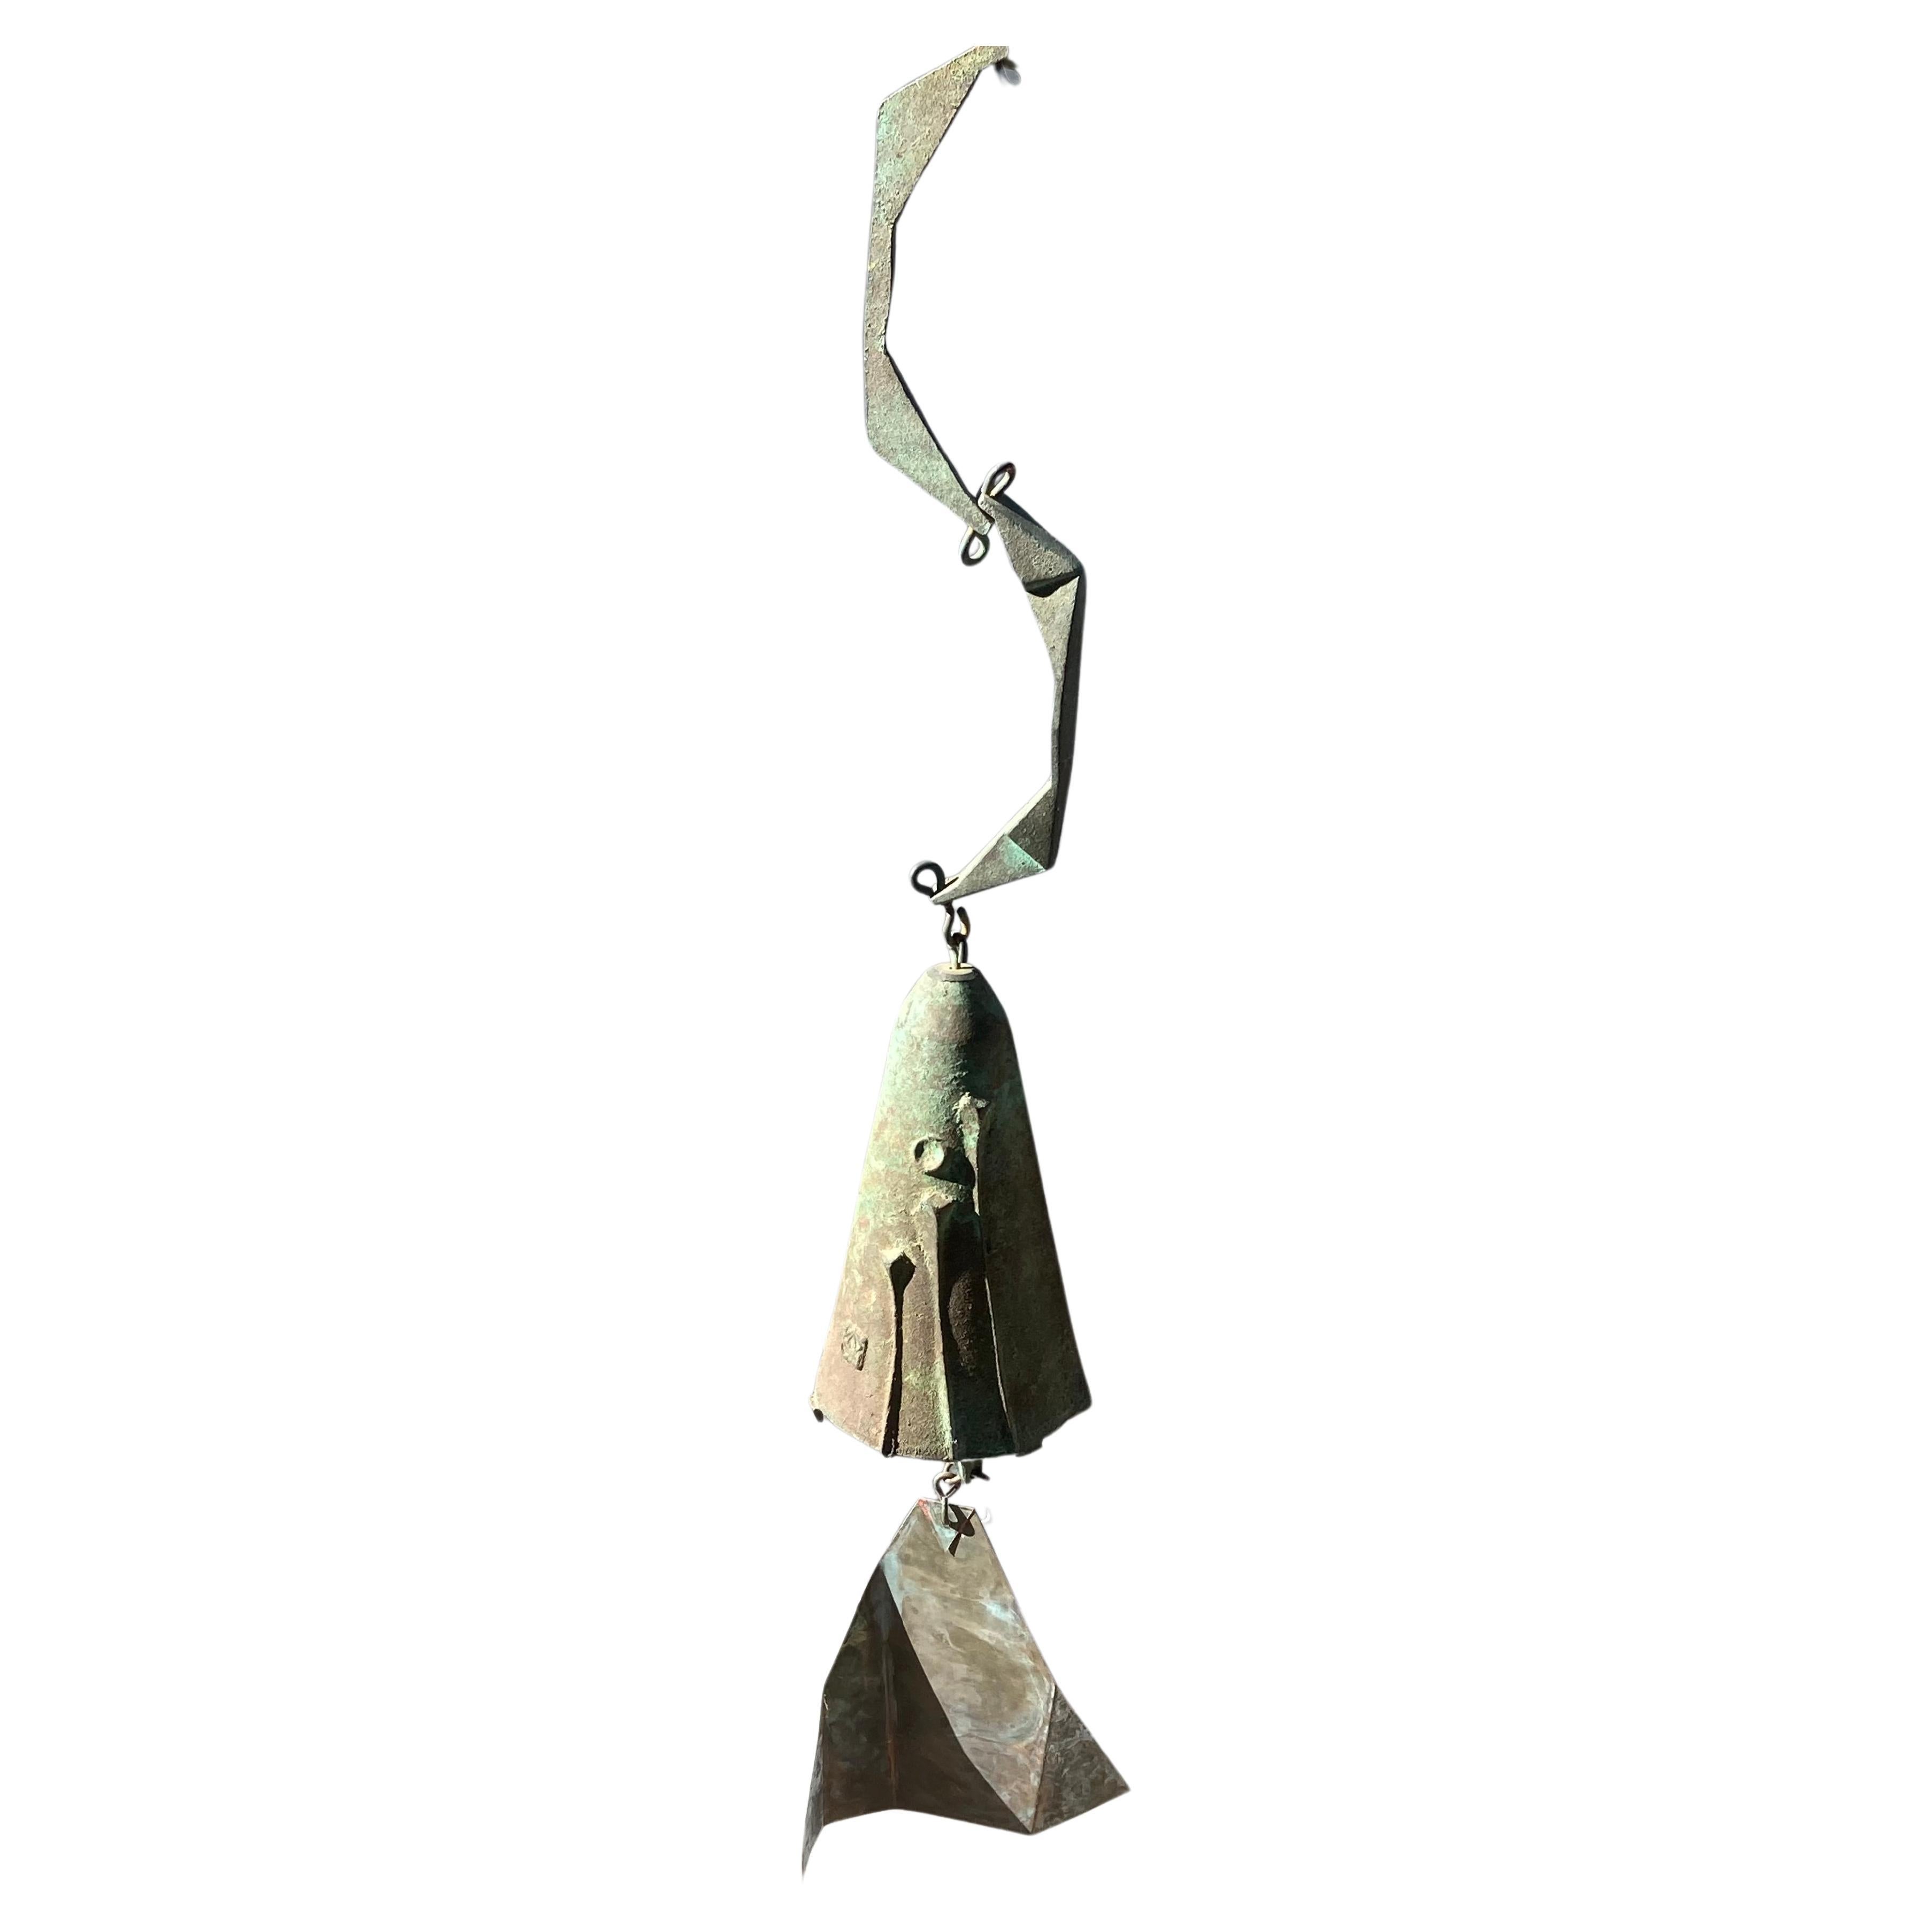 Paolo Soleri brutalist bronze , wind chime bell sculpture , for Arcosanti 